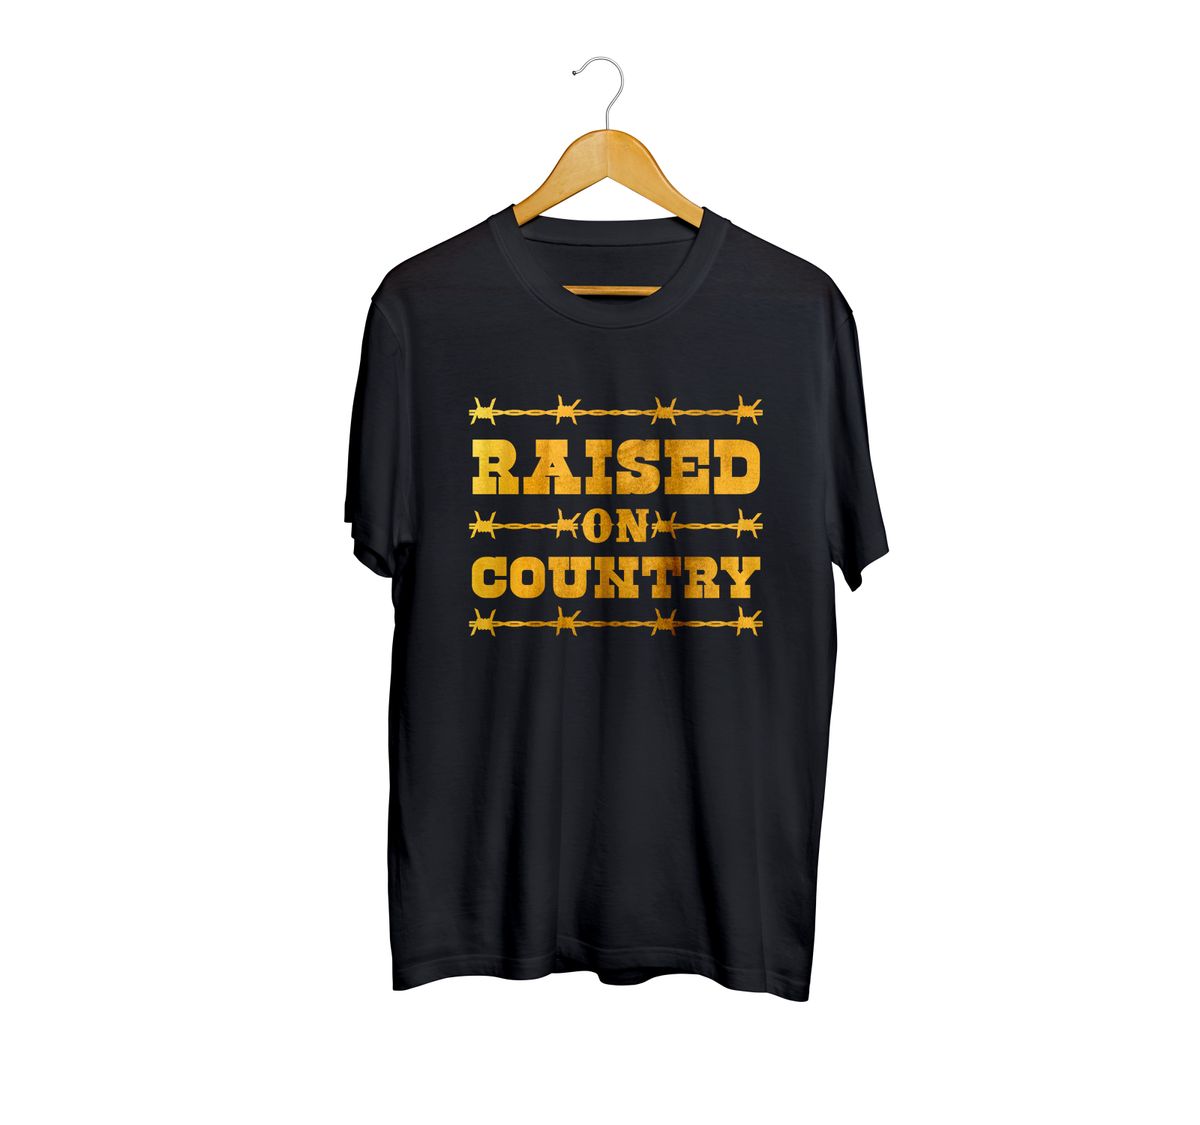 Country Music Fandom Black Raised T-Shirt image 1